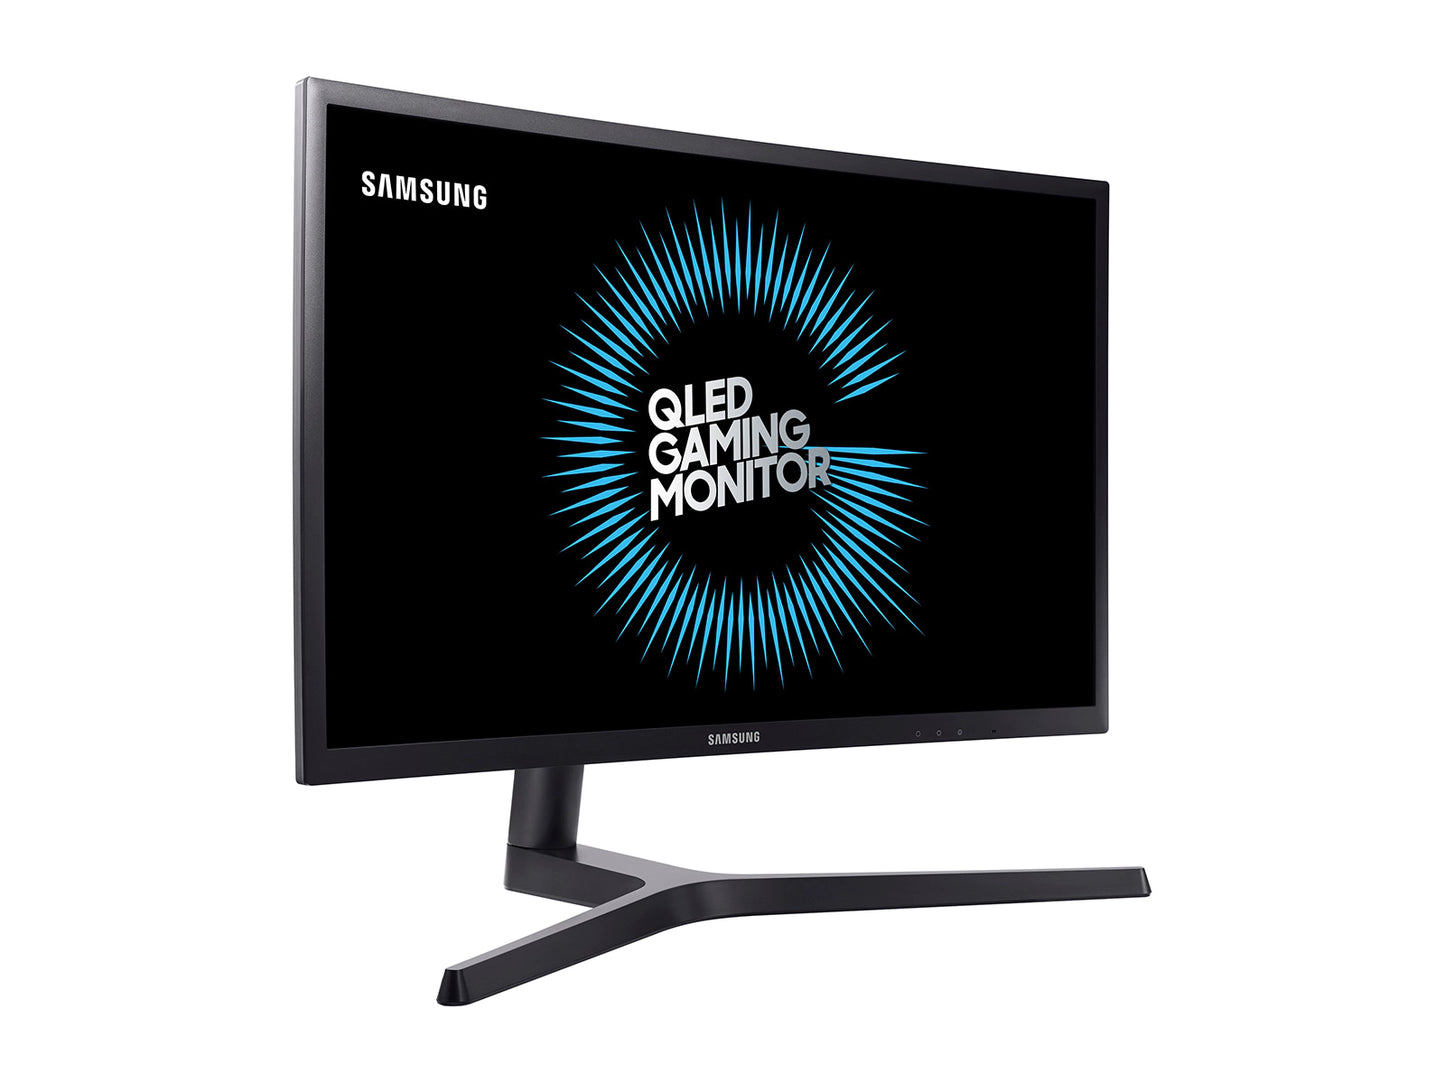 Samsung QLED 24" Gaming Monitor, FHD, 144Hz, 4ms